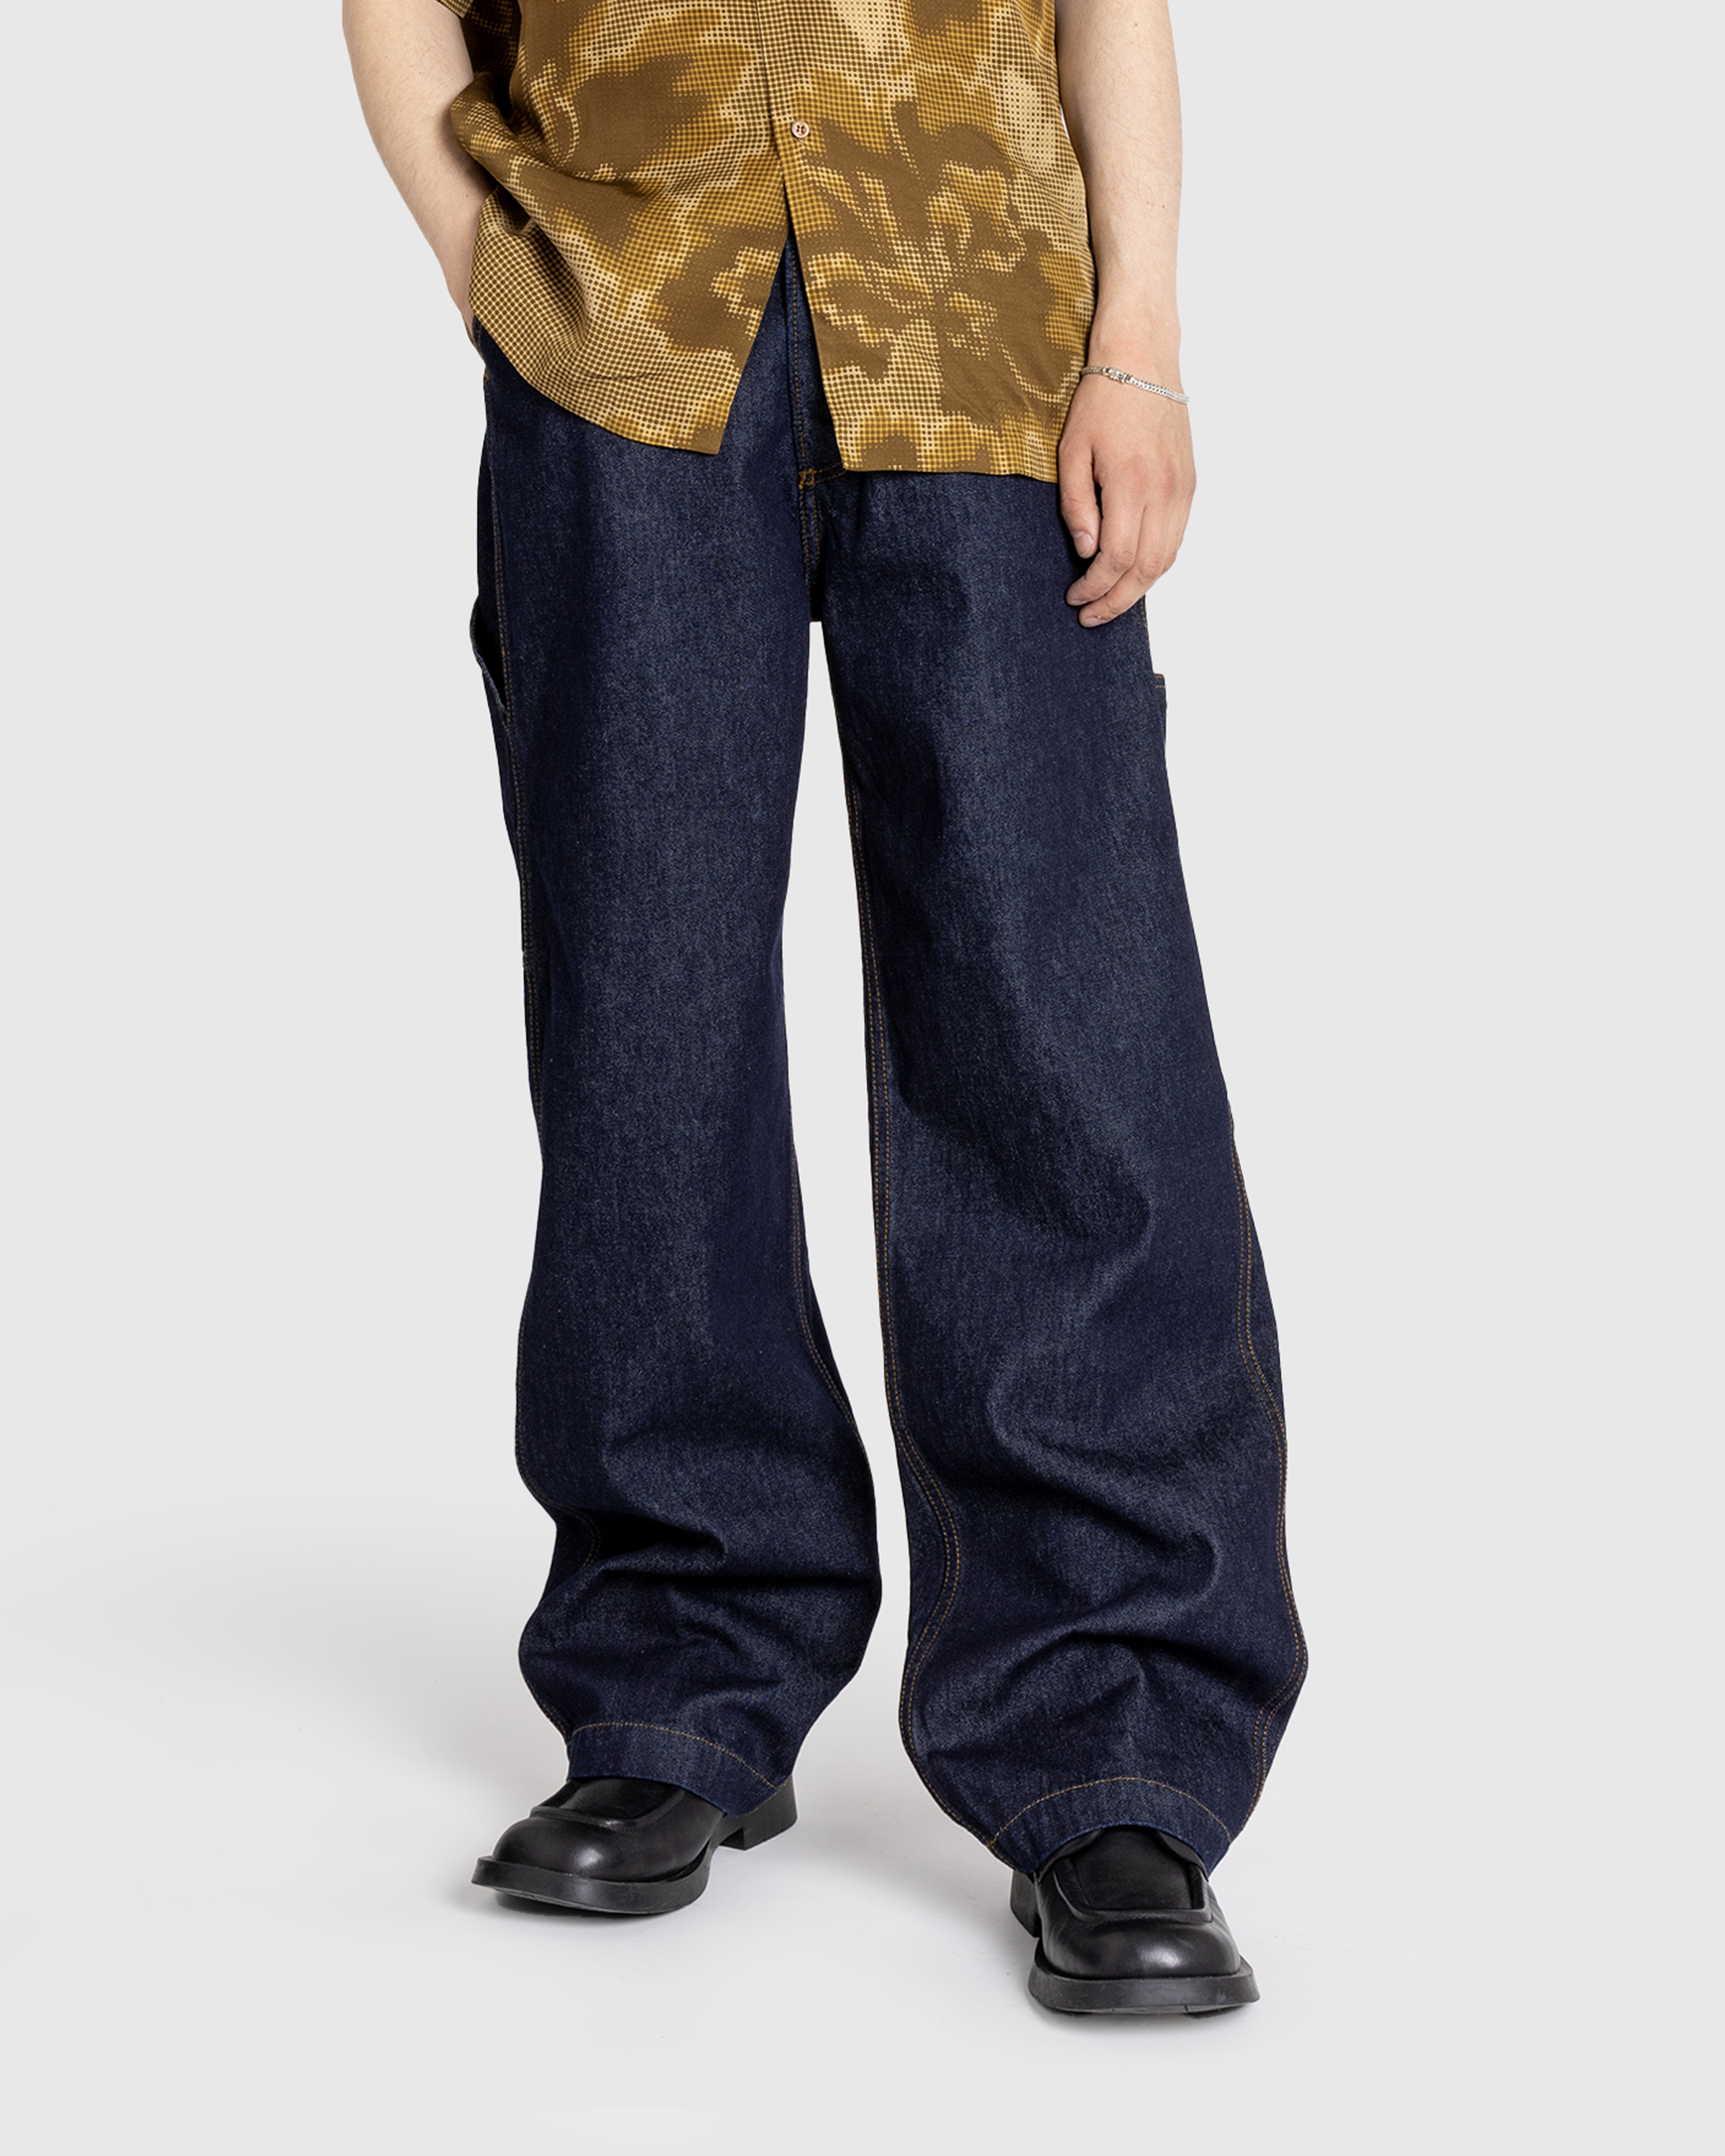 Dries van Noten – Pickerby Pants Indigo - Trousers - Blue - Image 2